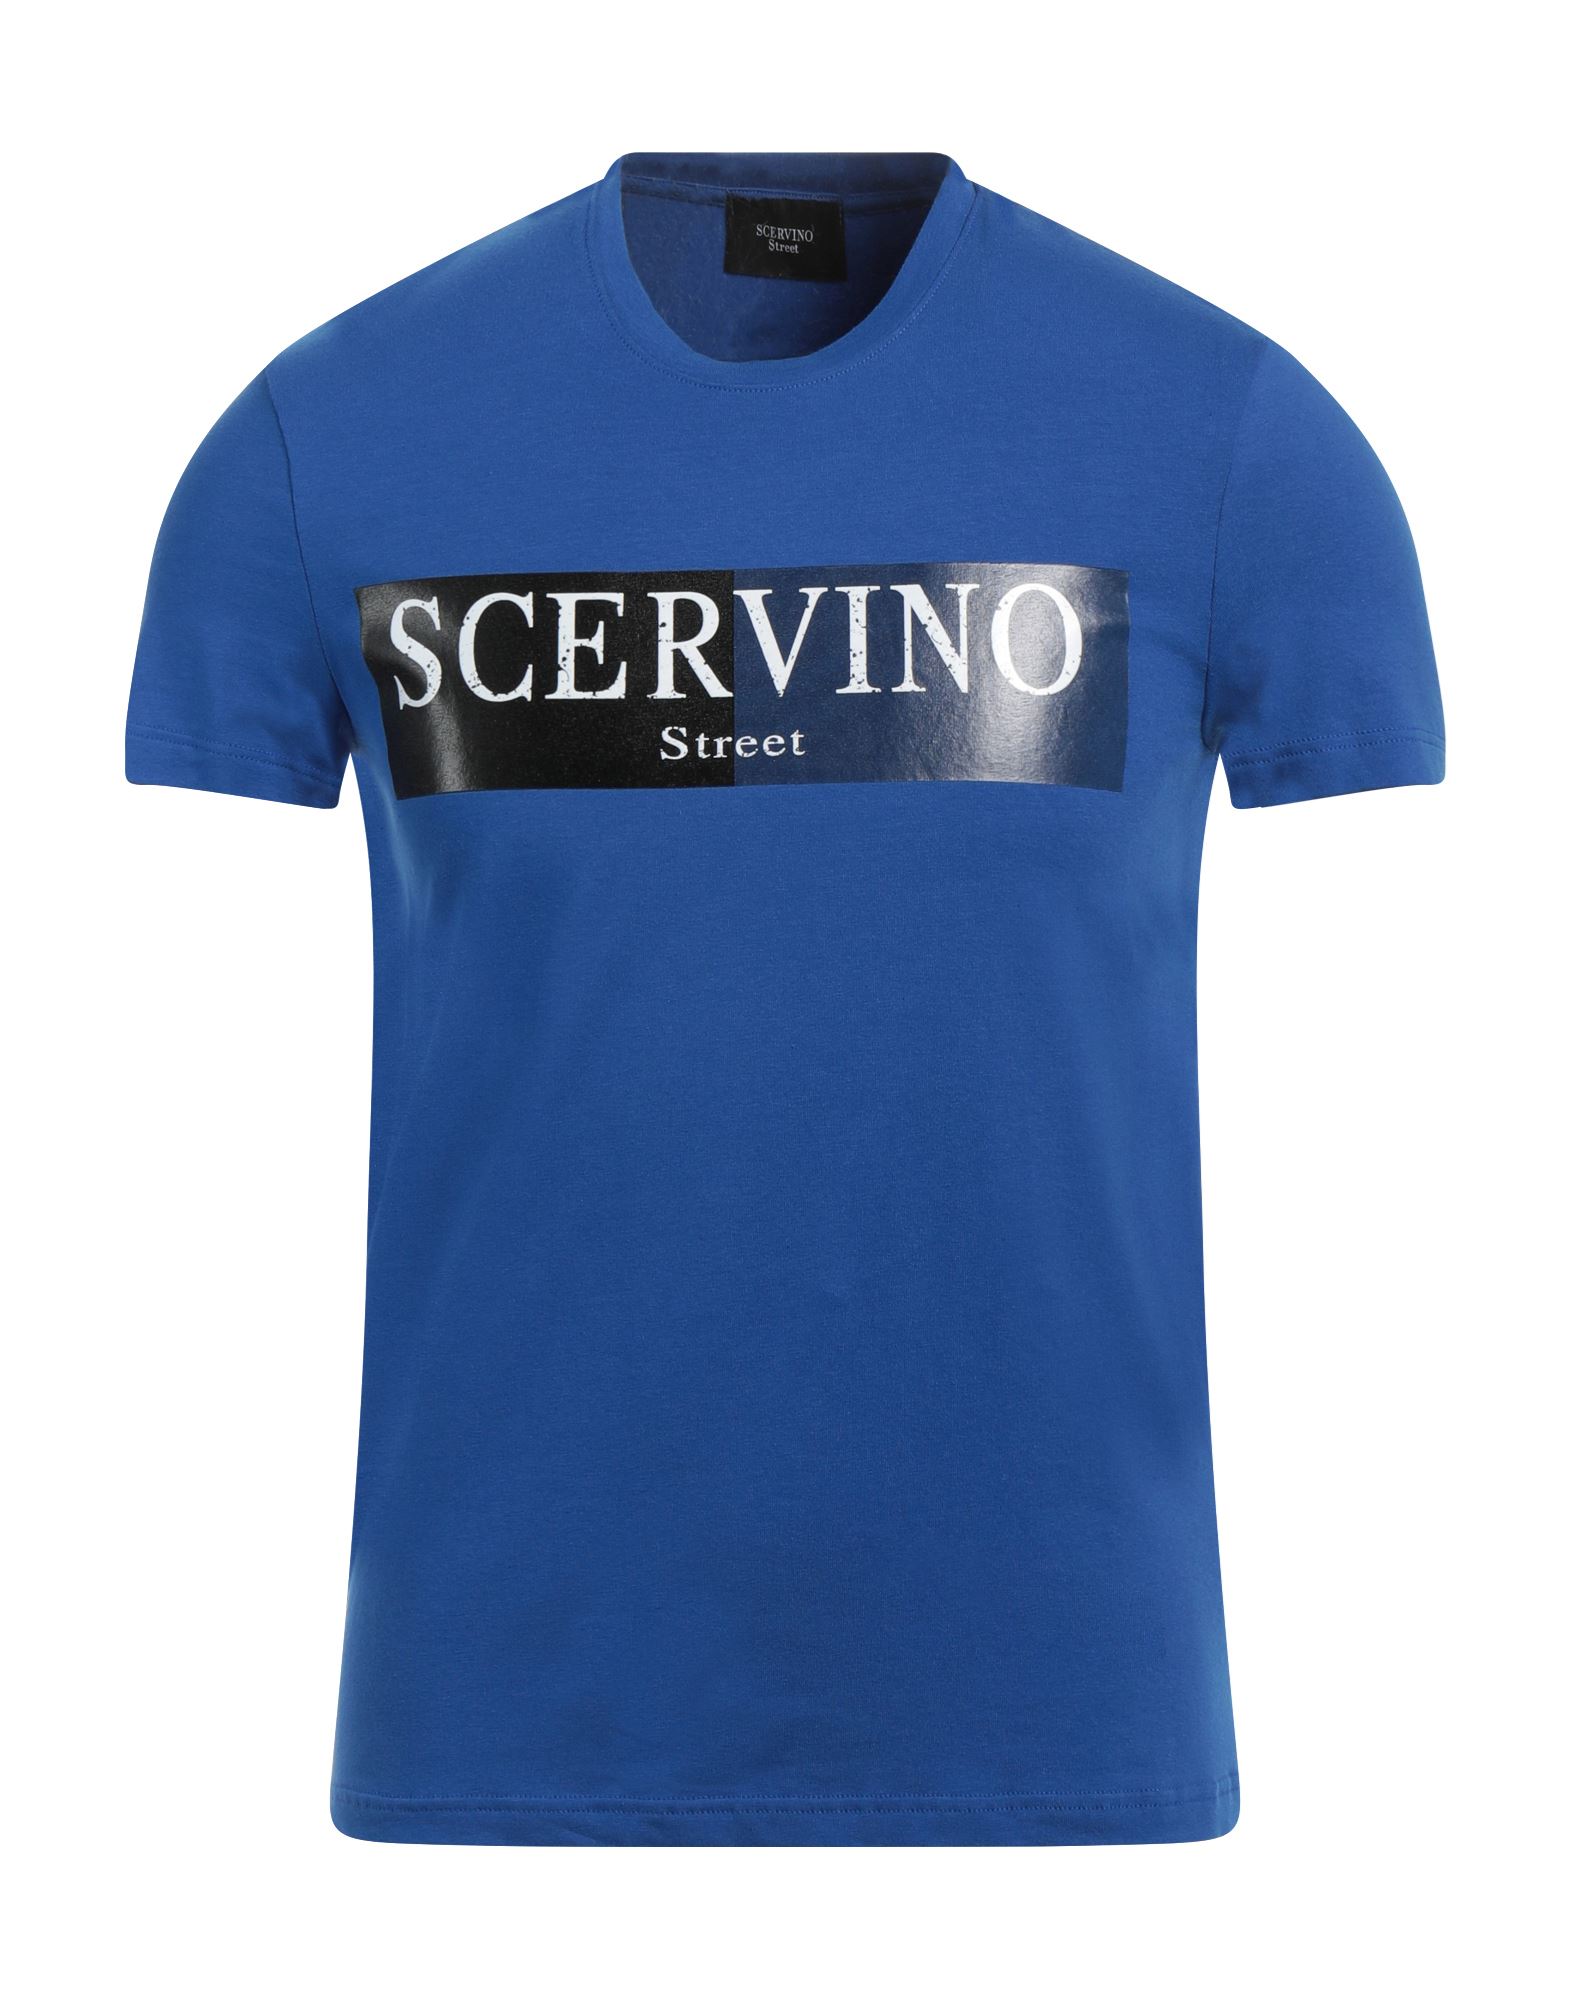 Ermanno Scervino T-shirts In Bright Blue